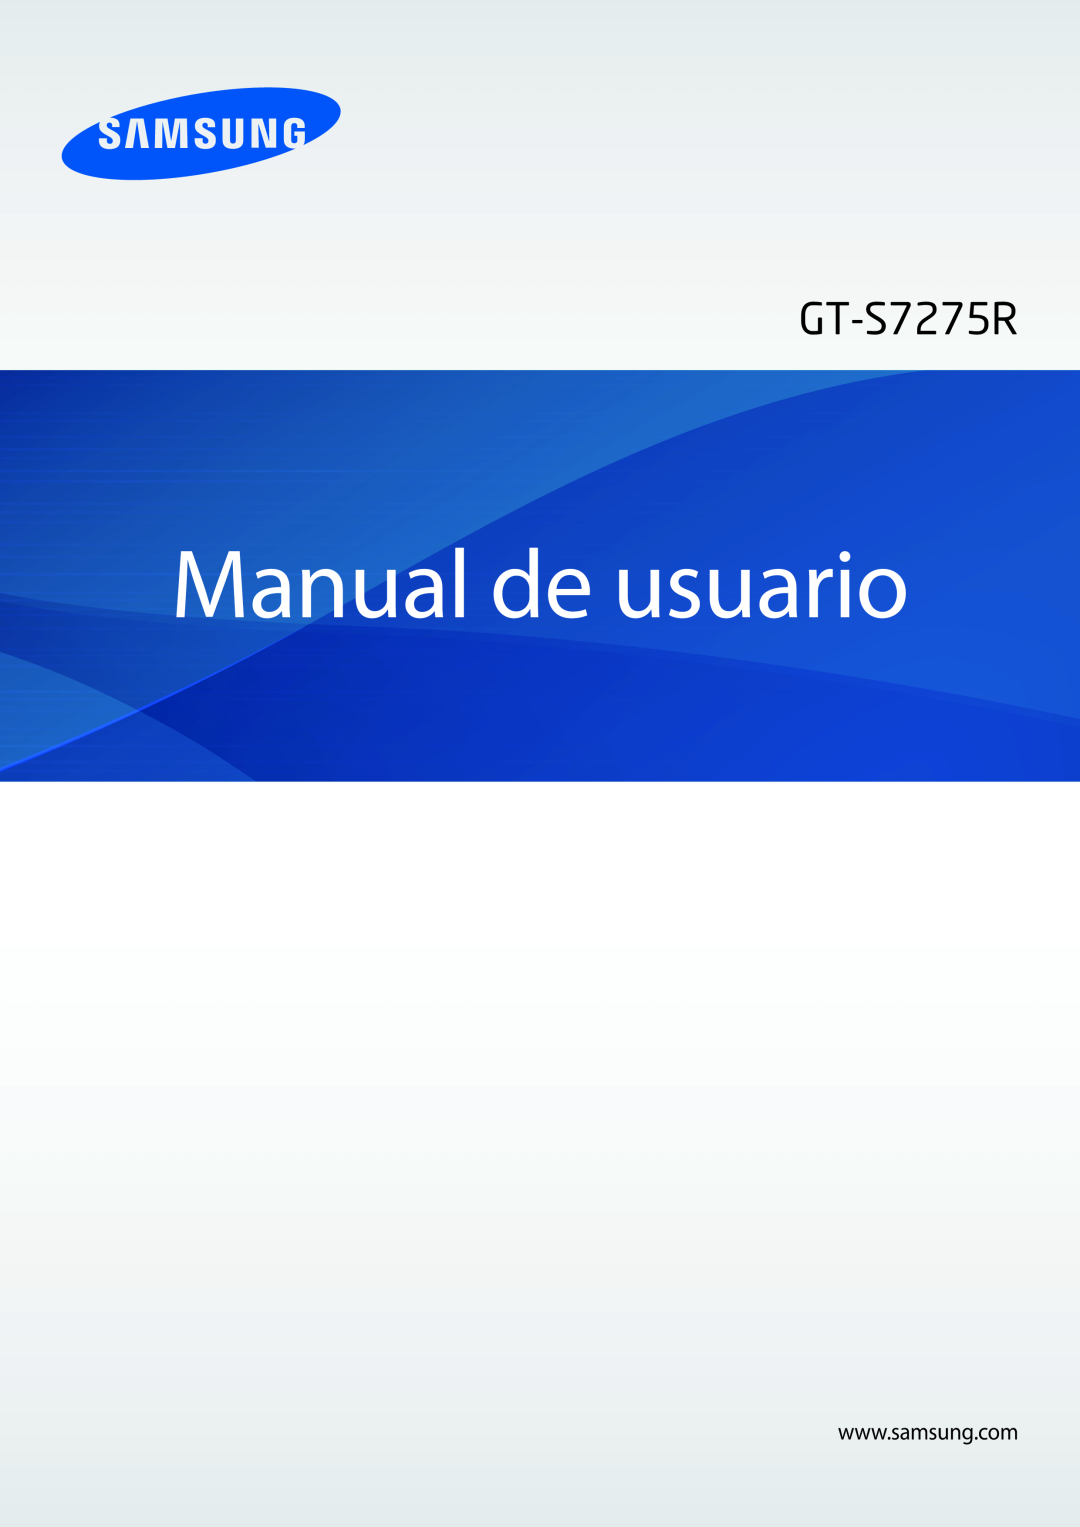 Samsung GT-S7275HKNOPT, GT-S7275HKNTPH, GT-S7275UWNDBT, GT-S7275HKNXEF, GT-S7275UWNXEF manual Manual de usuario, GT-S7275R 